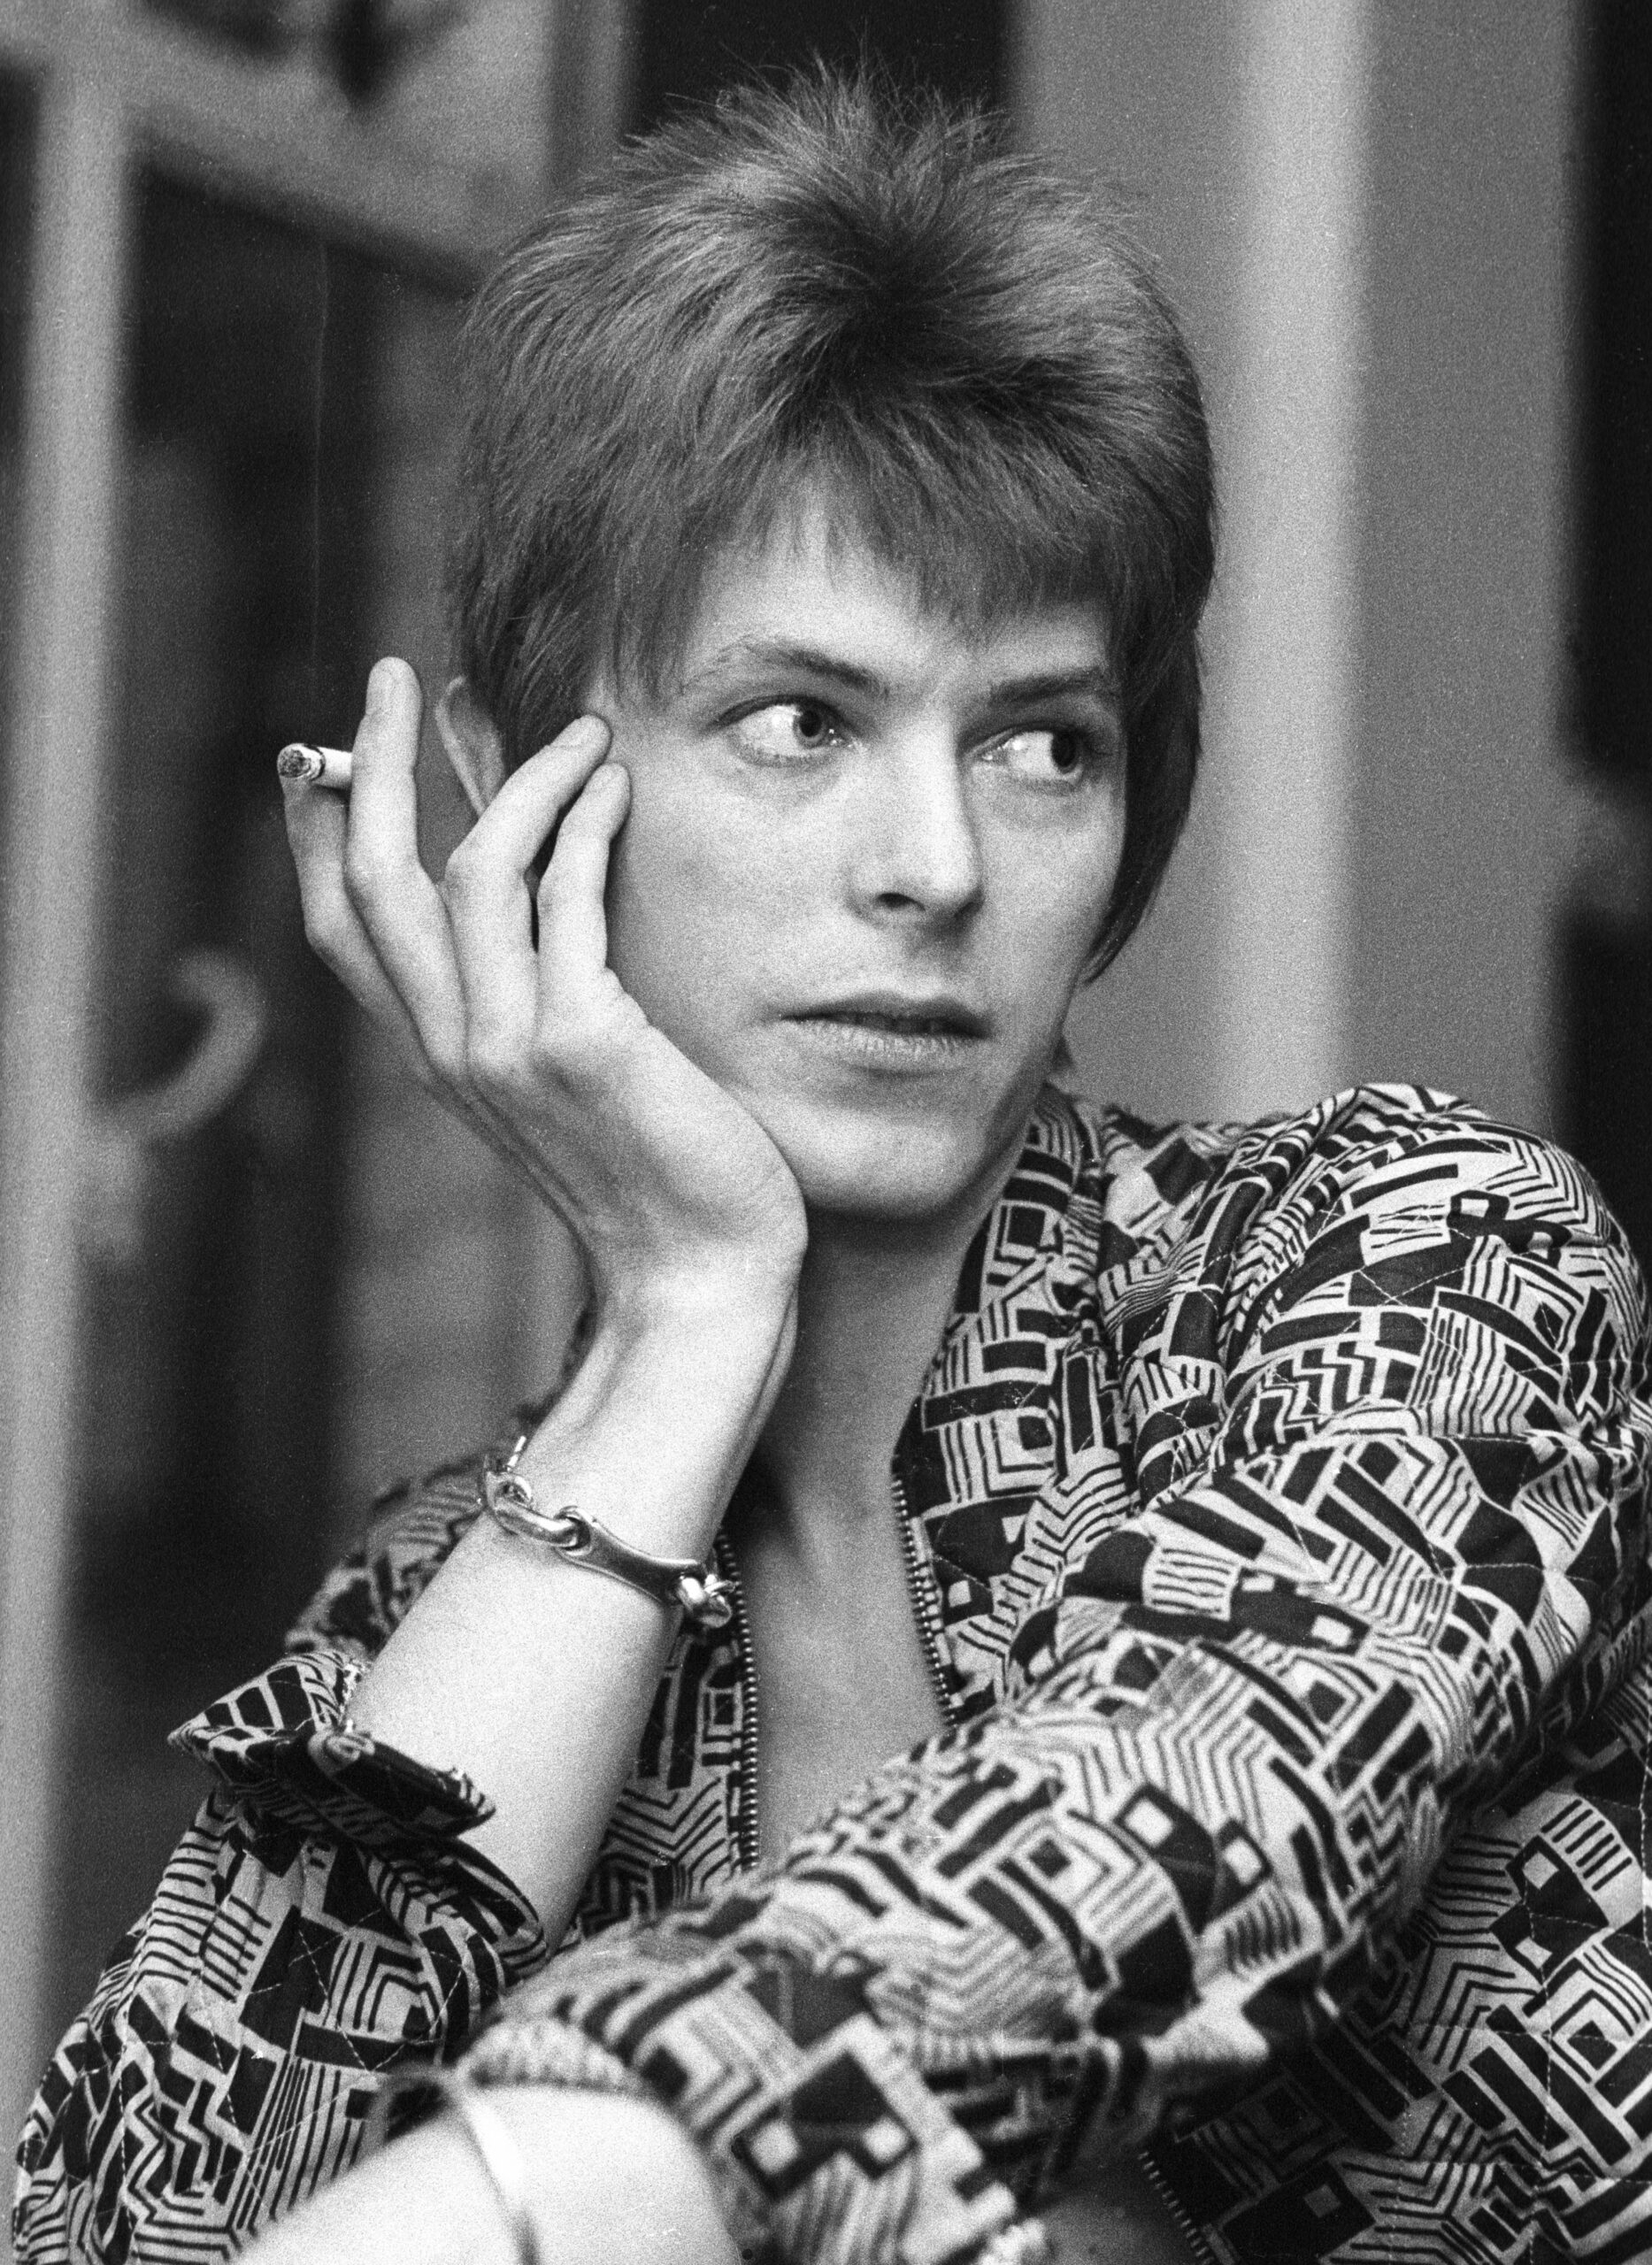     Barrie Wentzell, David Bowie, 1972

